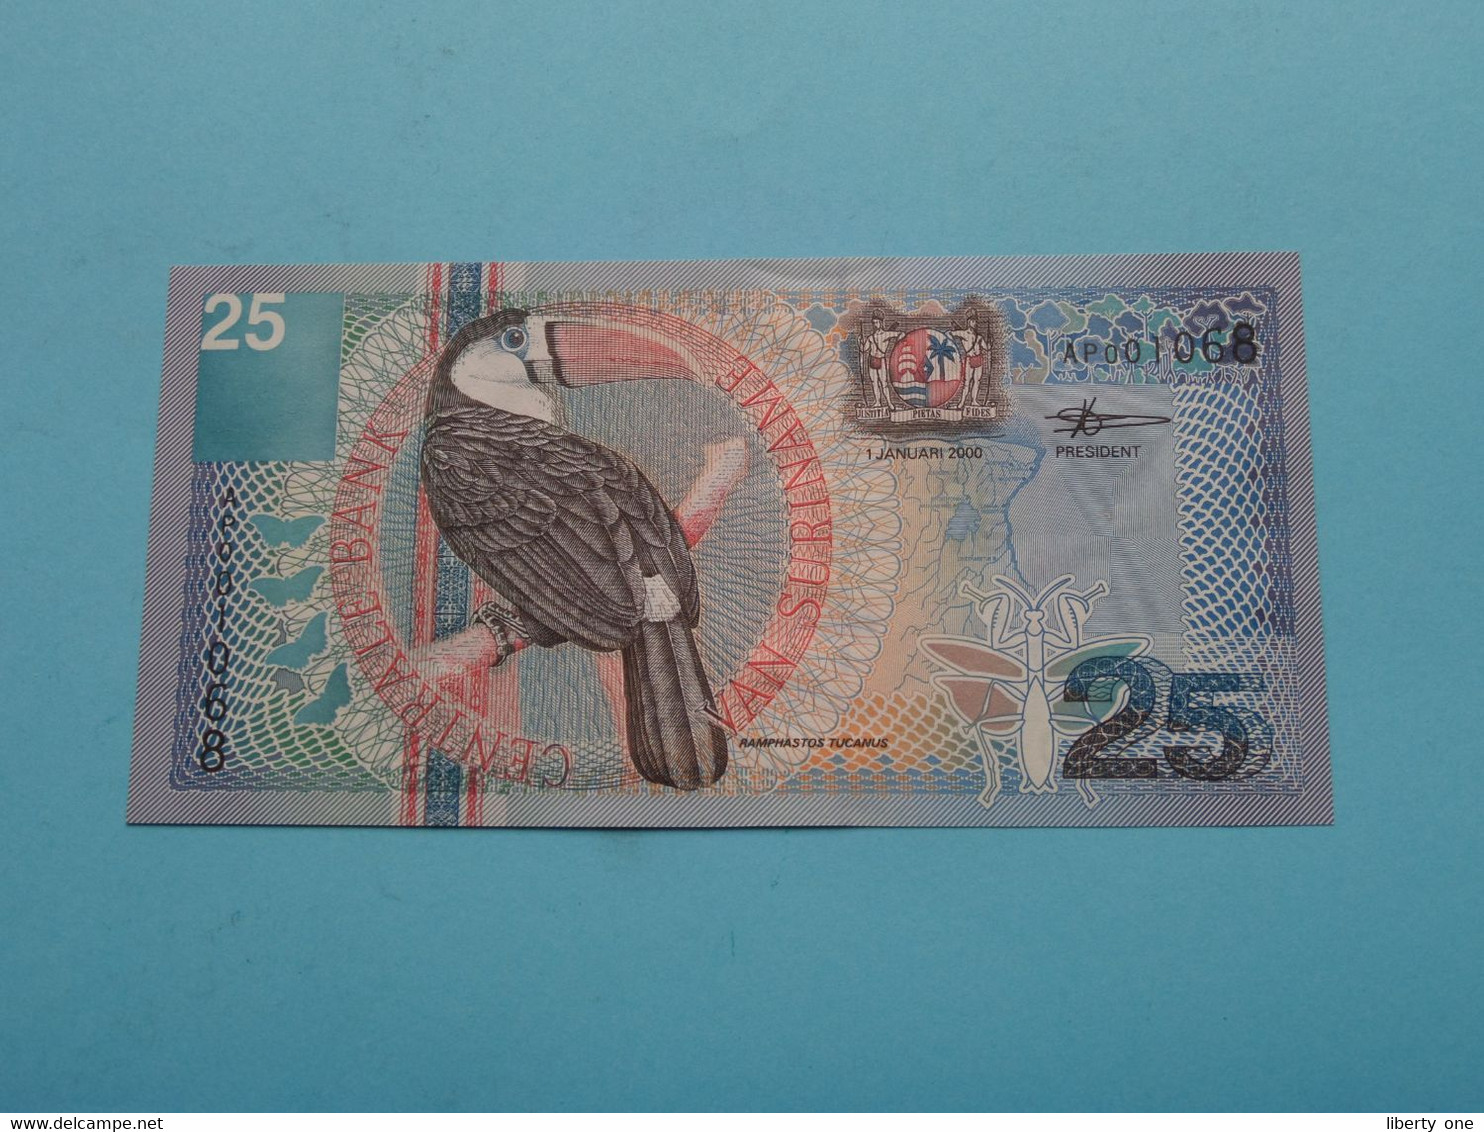 25 Gulden ( AP001068 ) Centrale Bank Van SURINAME - 1 Jan 2000 ( For Grade, Please See Photo ) UNC ! - Suriname